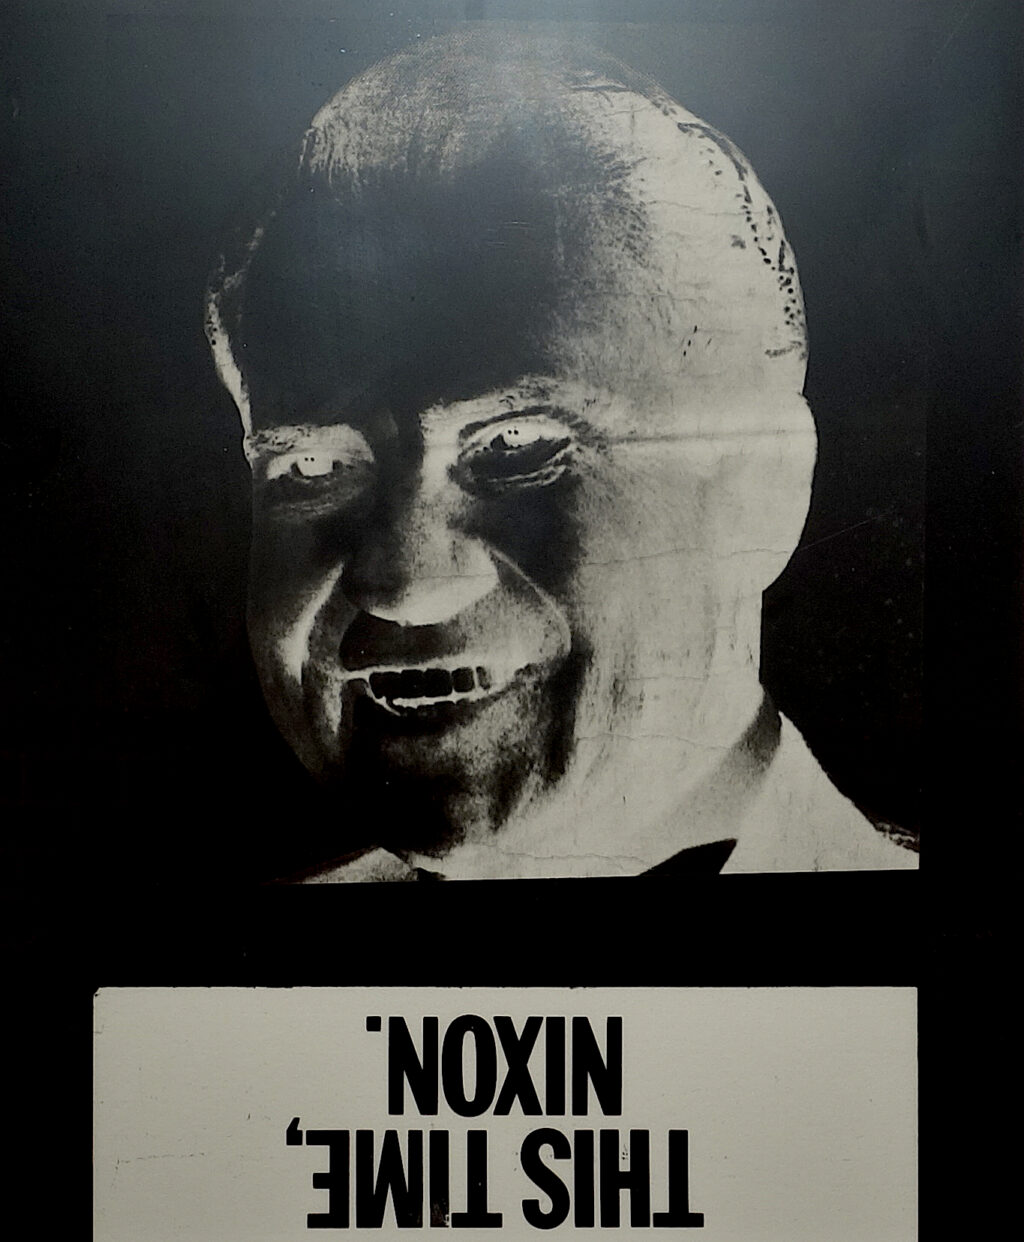 Cady Noland キャディ・ノーランド Untitled (Nixon cut-out) 1992, Ed. 25